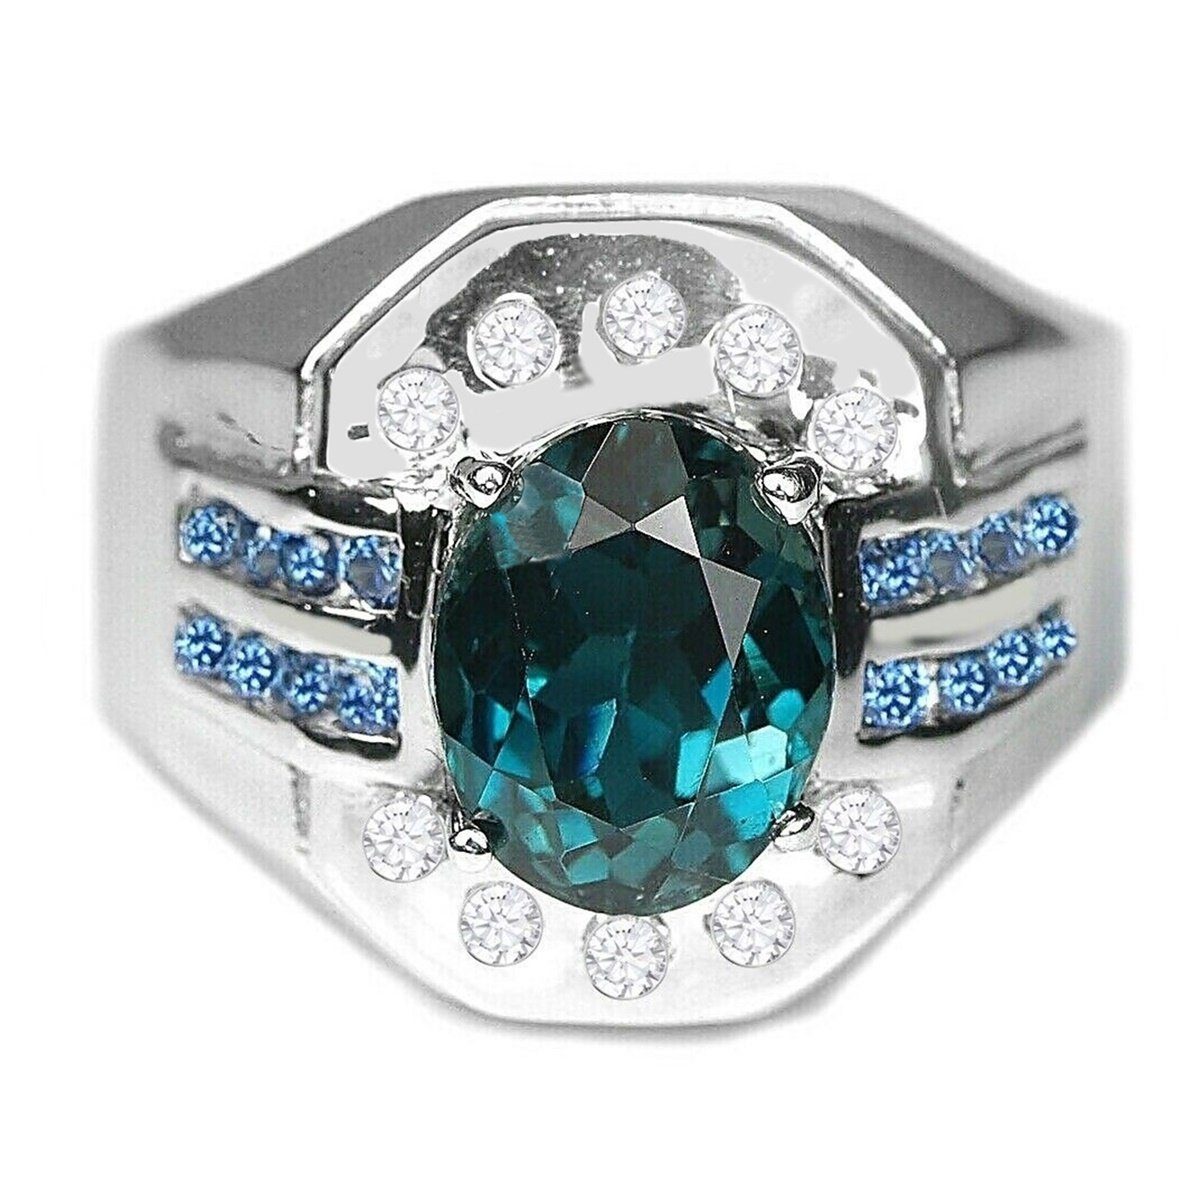 Goldene Hufeisen Silberring London Blautopas Ring aus 925 Silber Damen echte Edelsteine Fingerring, Einzelstück, Handarbeit